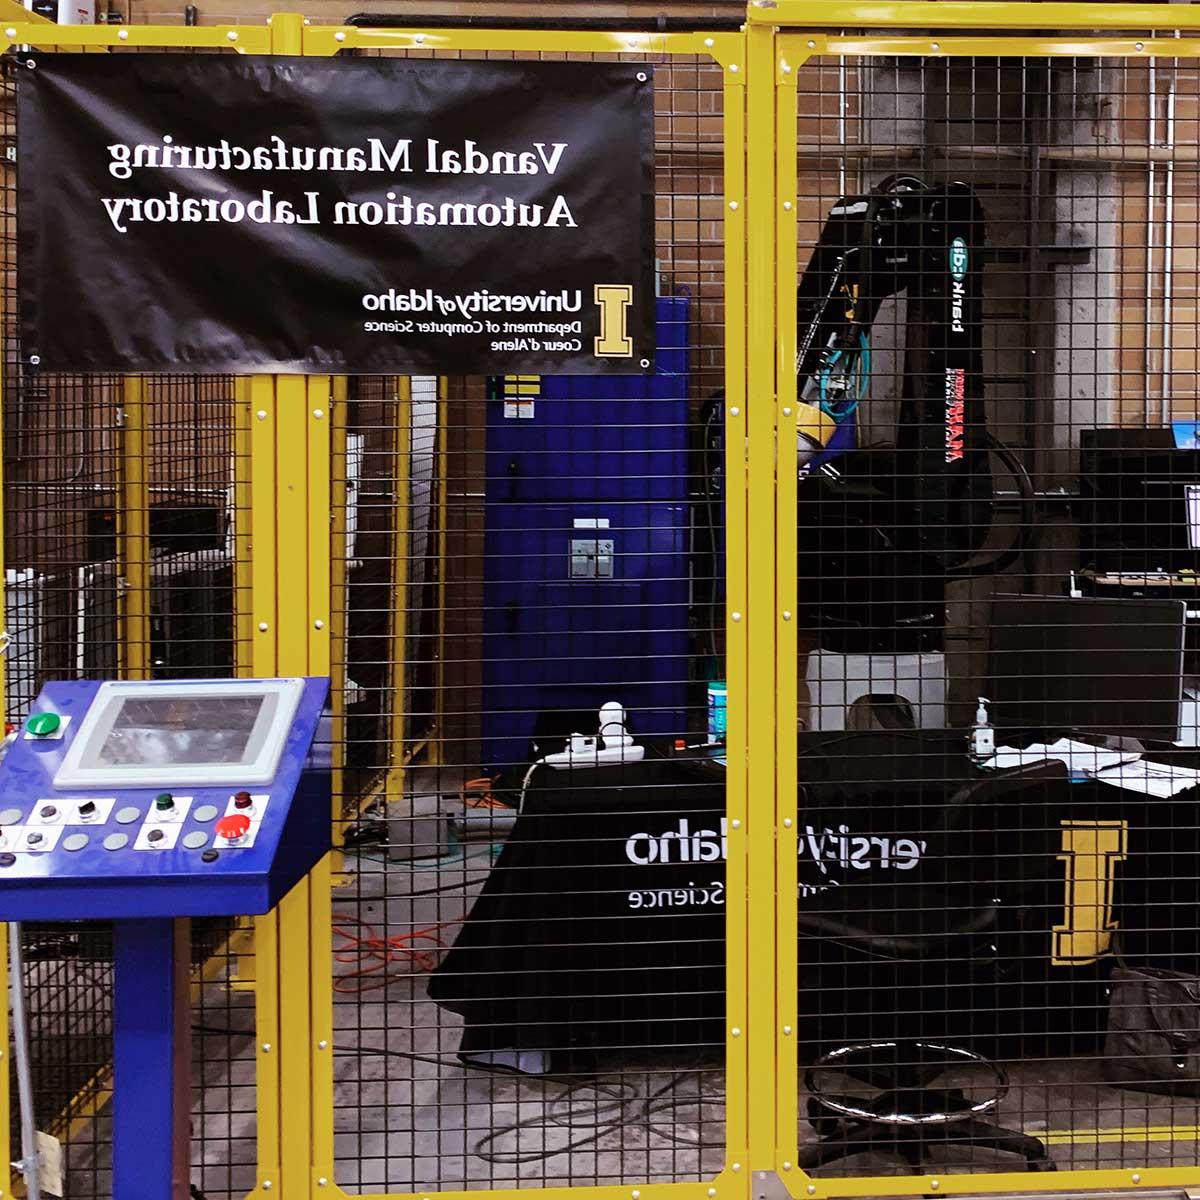 Vandal Manufacturing Automation Laboratory